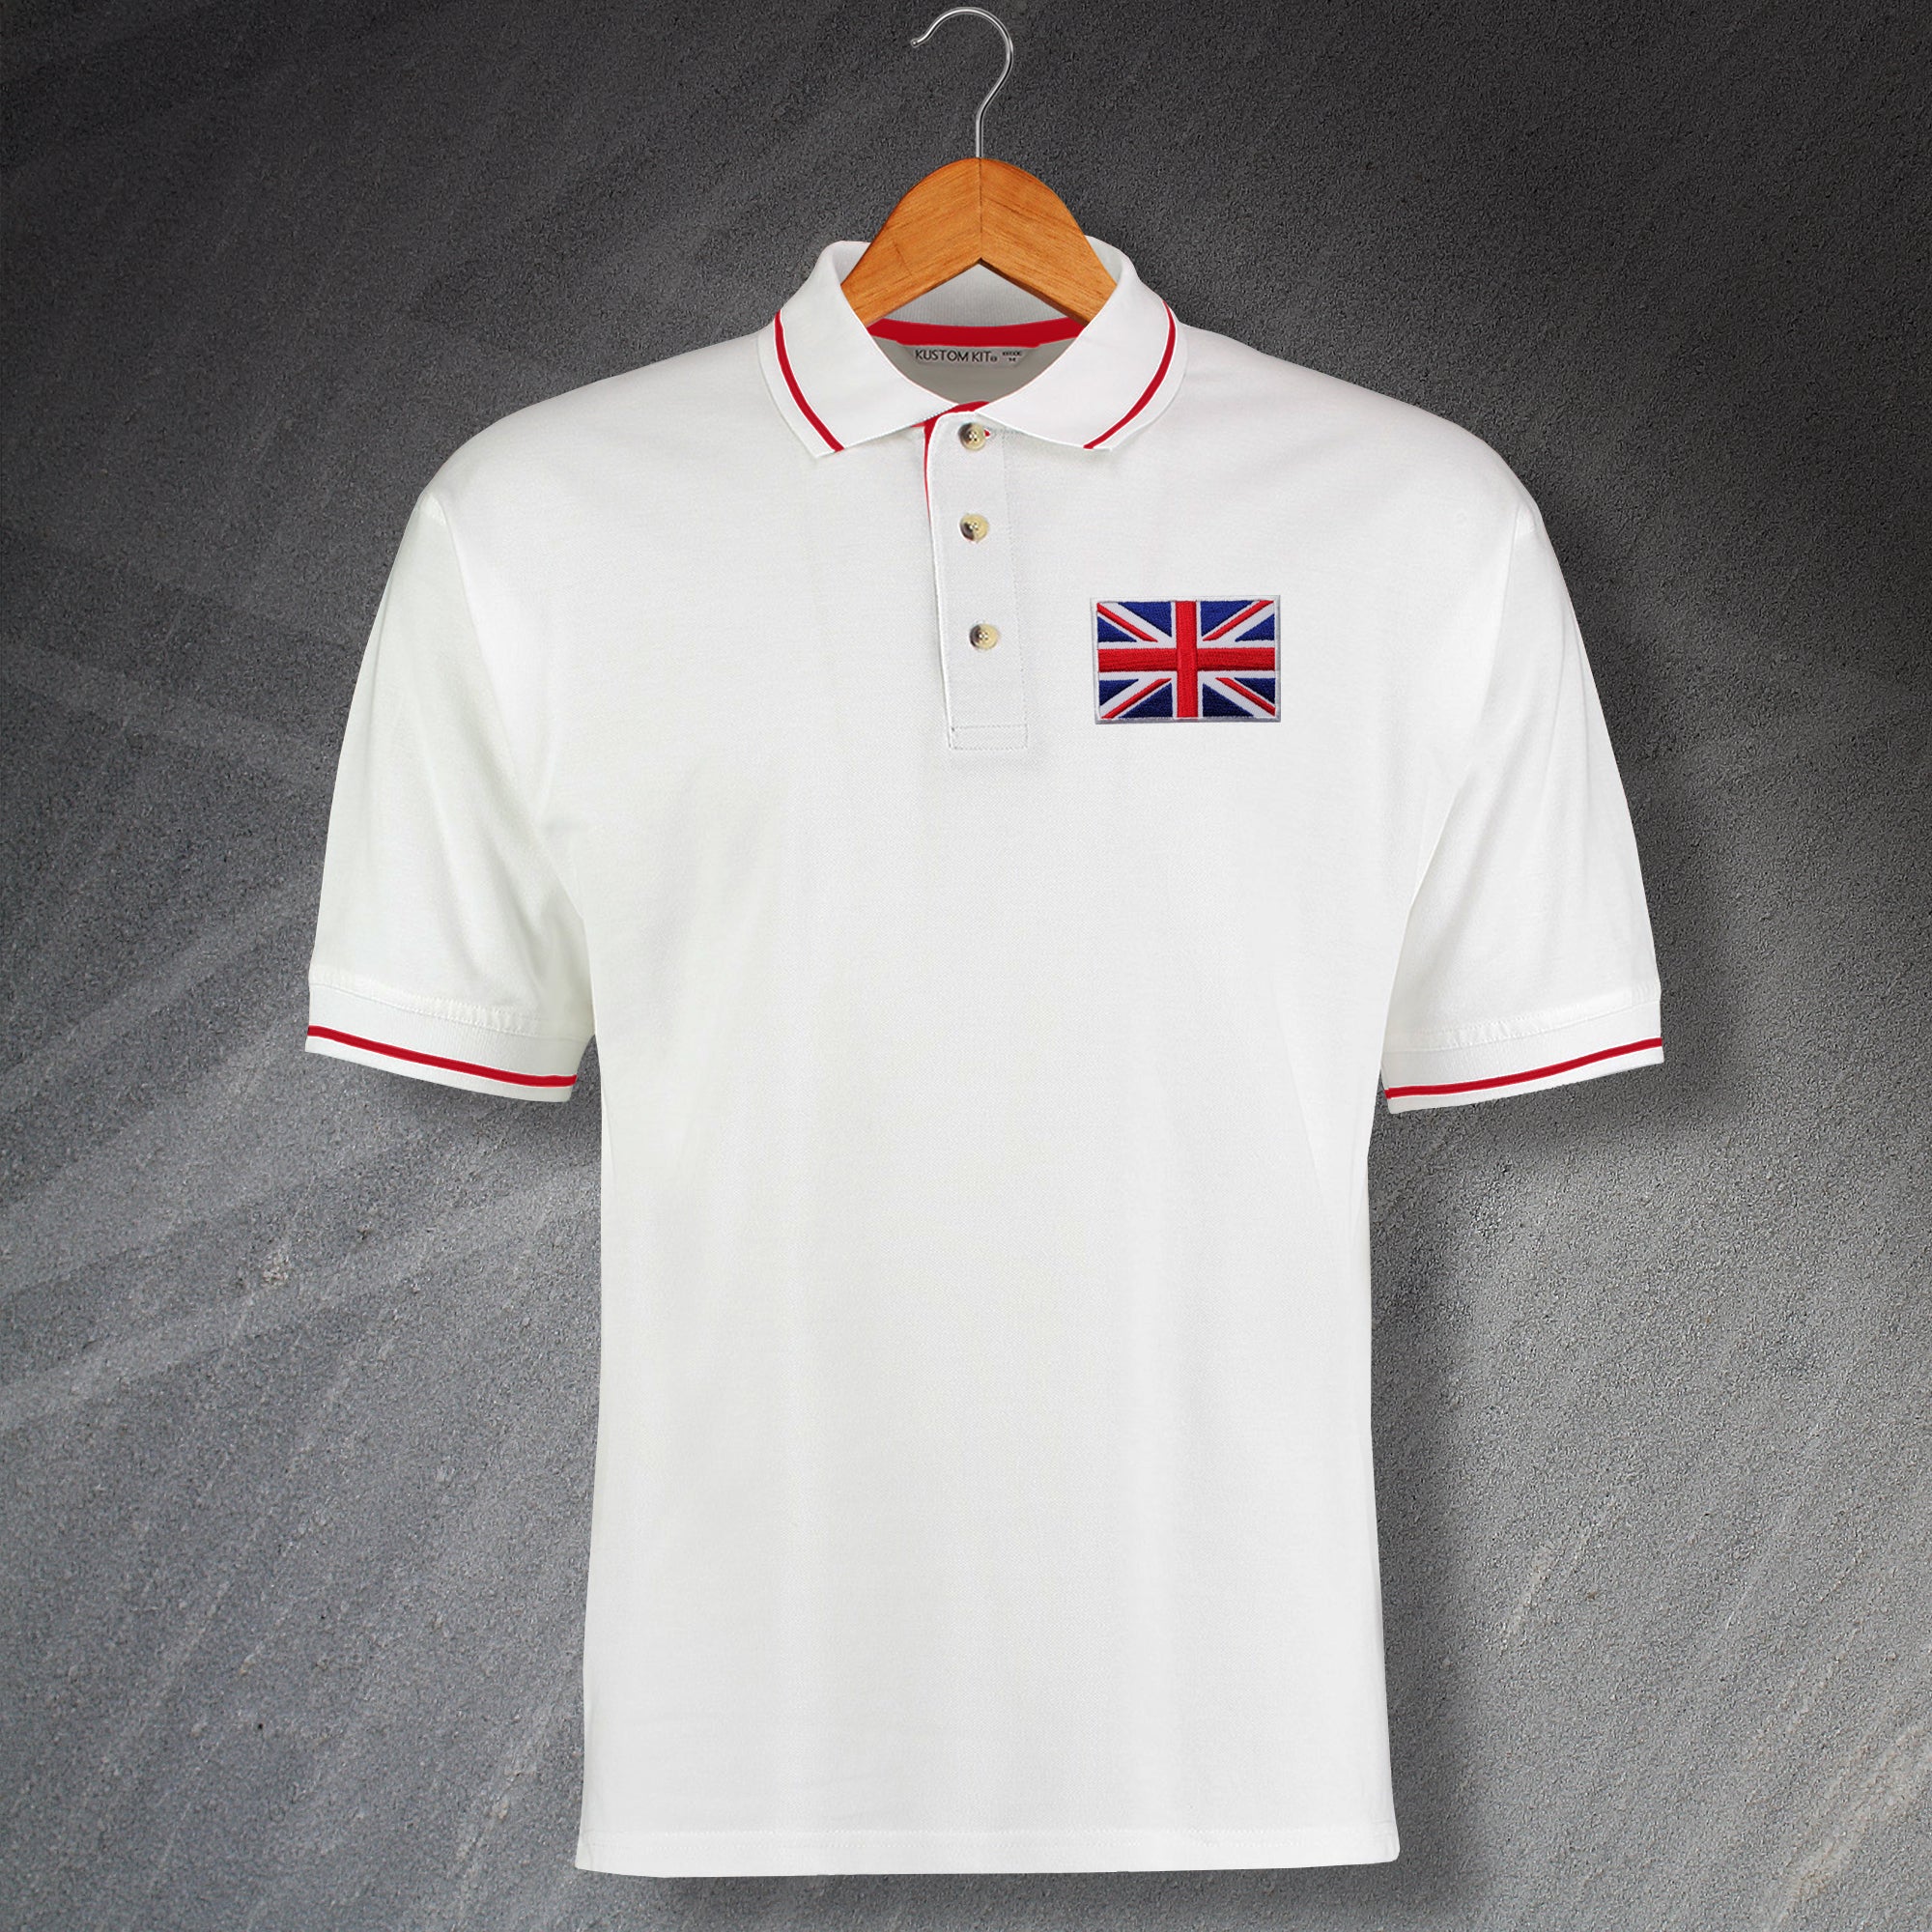 Union Jack Polo Shirt Mens | Buy UK Flag Clothing Online – Sloganite.com